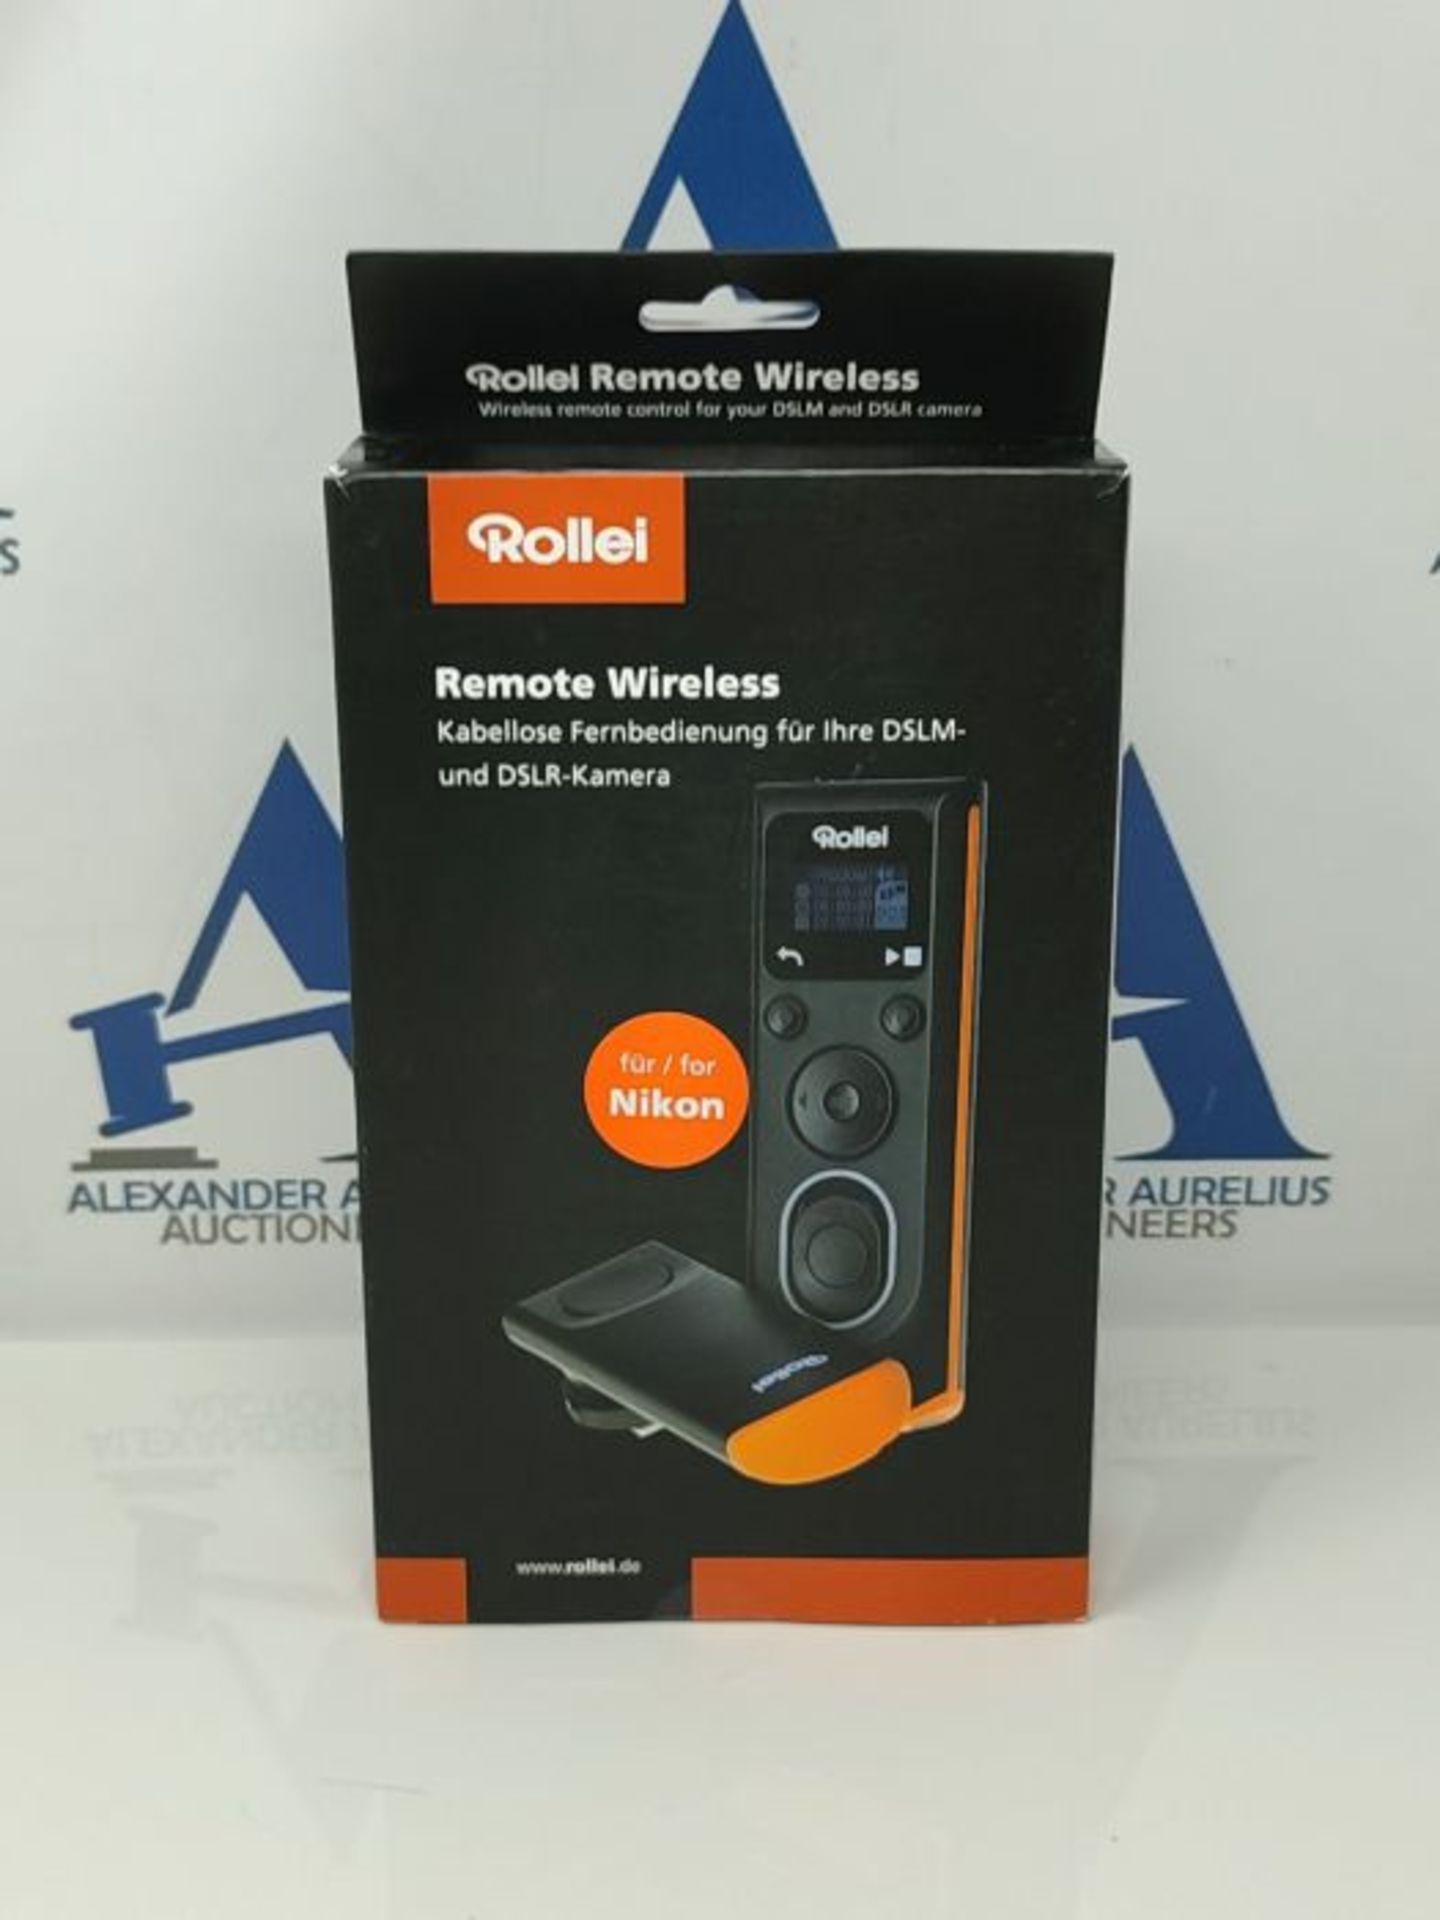 Rollei wireless remote release for Nikon ? Allows wireless remote release, long exposu